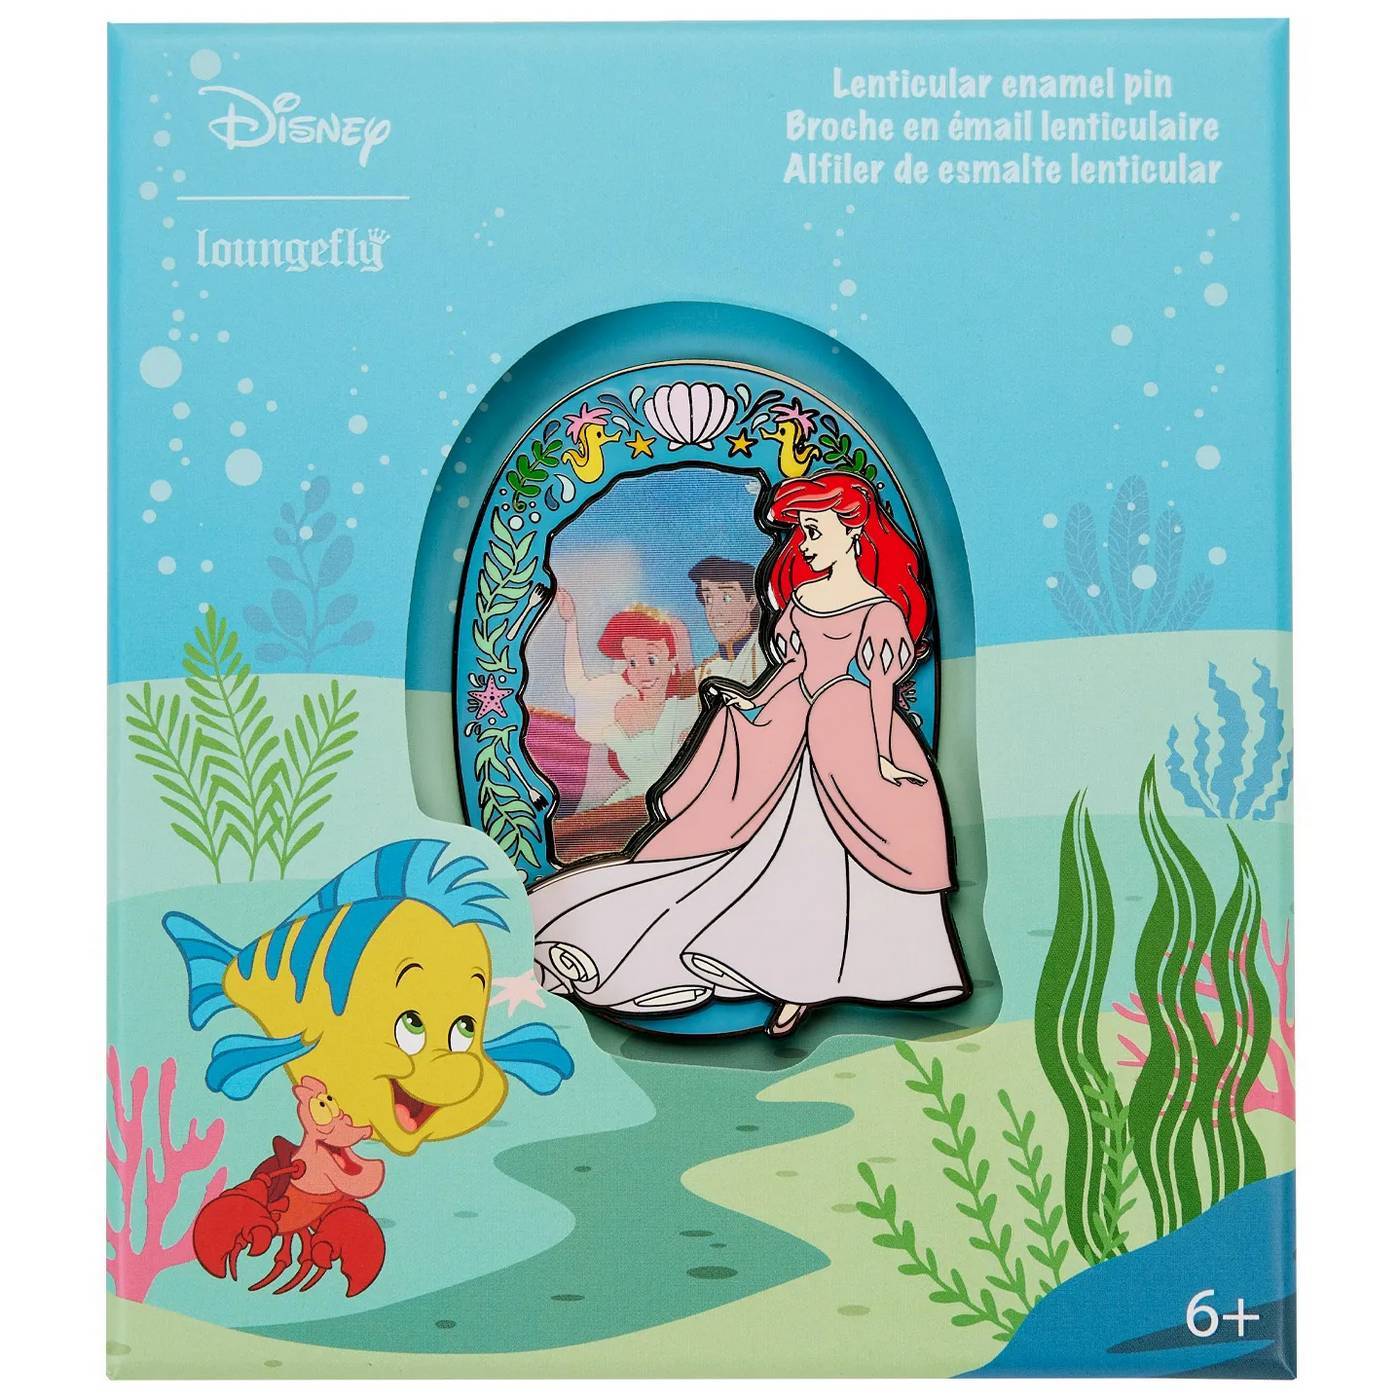 The Little Mermaid Ariel Princess Series Collector Box